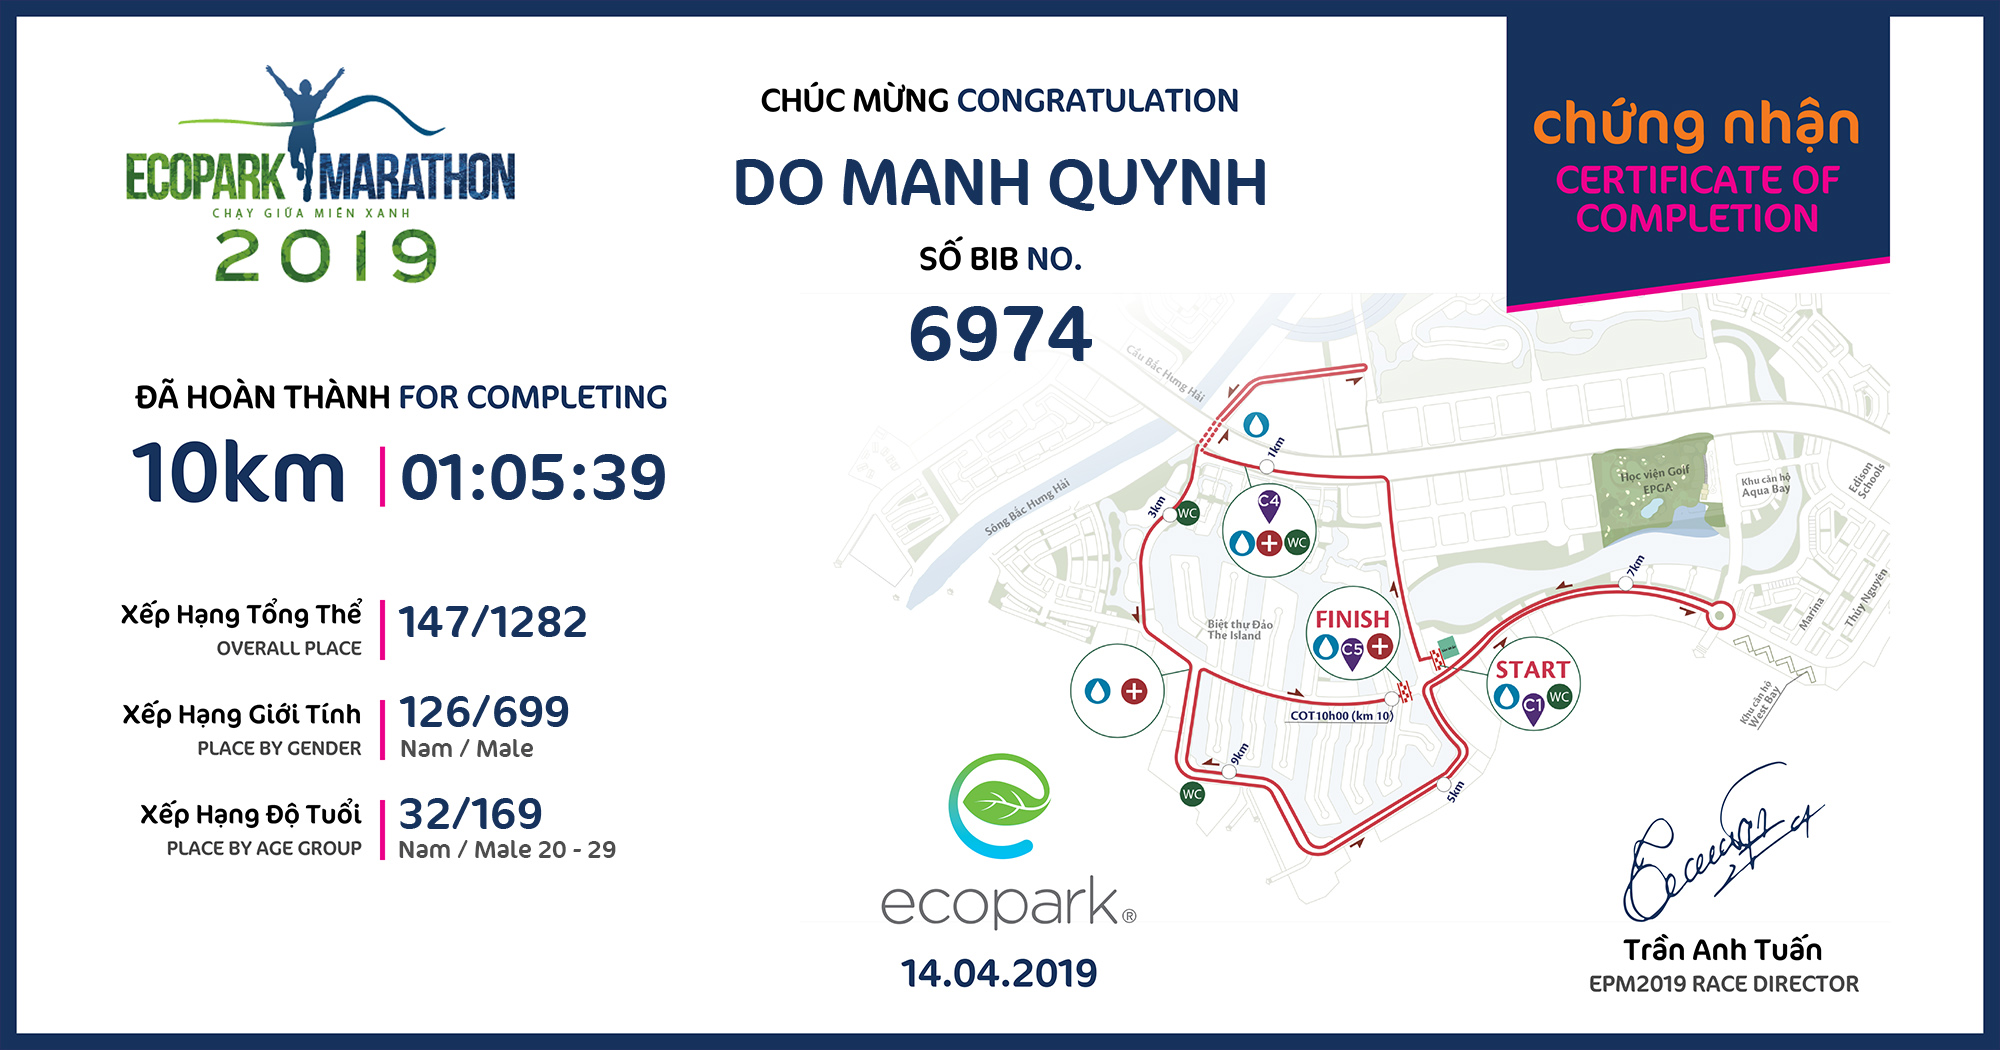 6974 - Do Manh Quynh